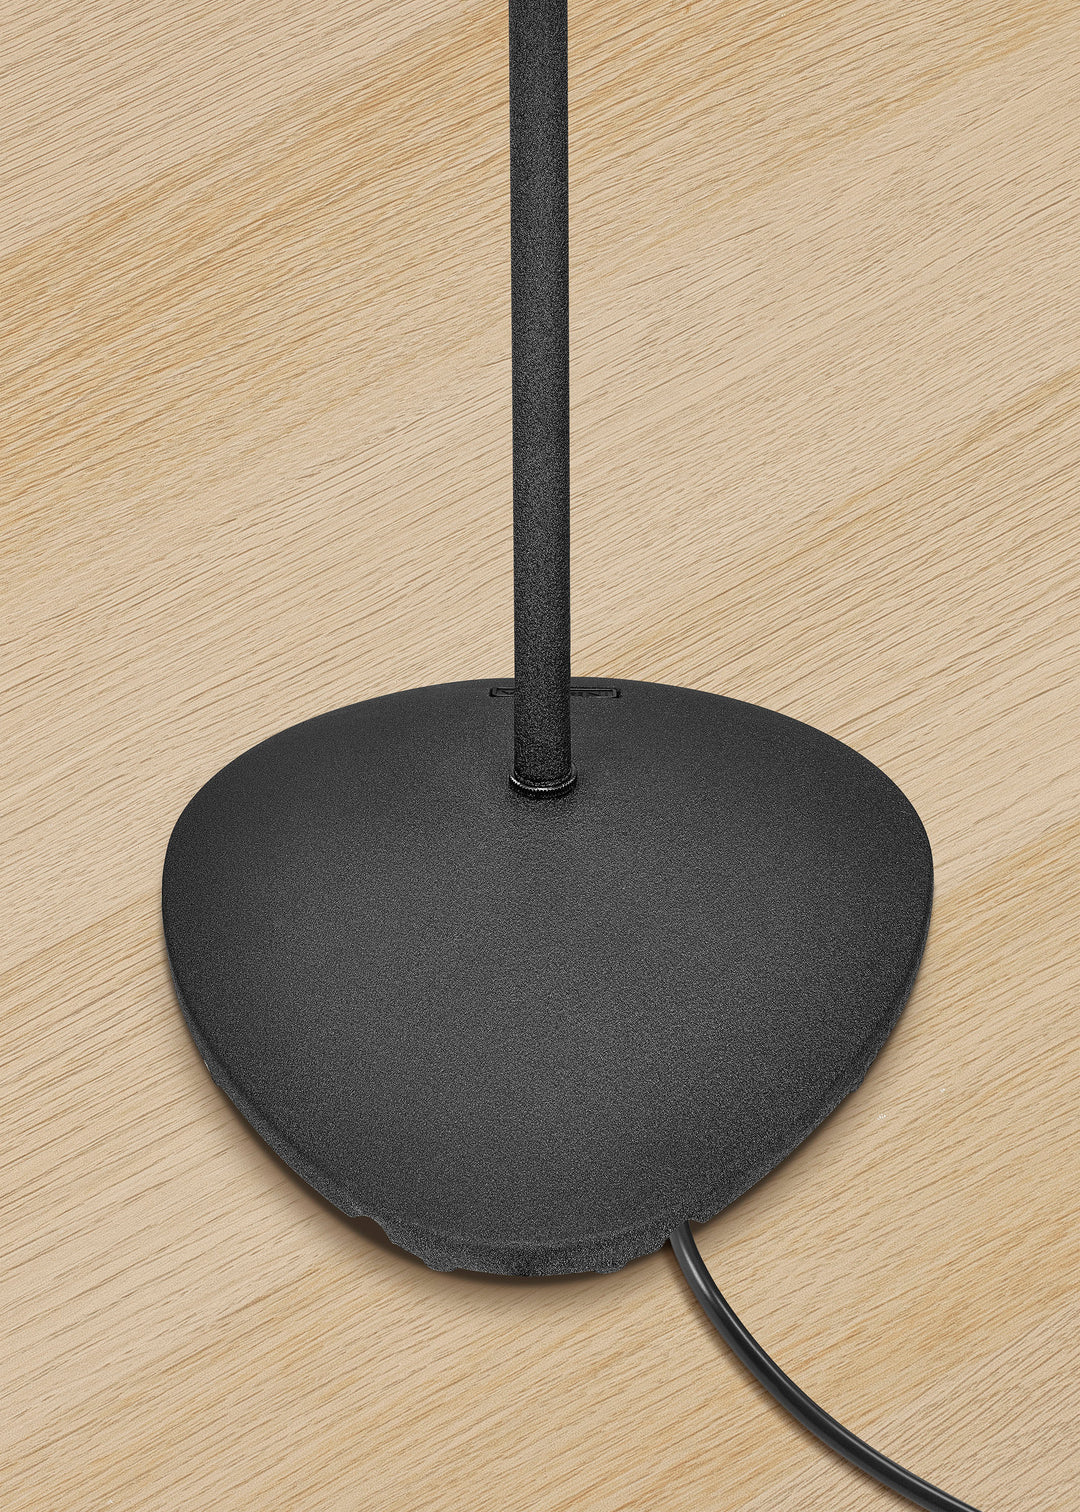 Insignia™ - 28 – 38" Adjustable Height Speaker Stands for Satellite Speakers - Black_7